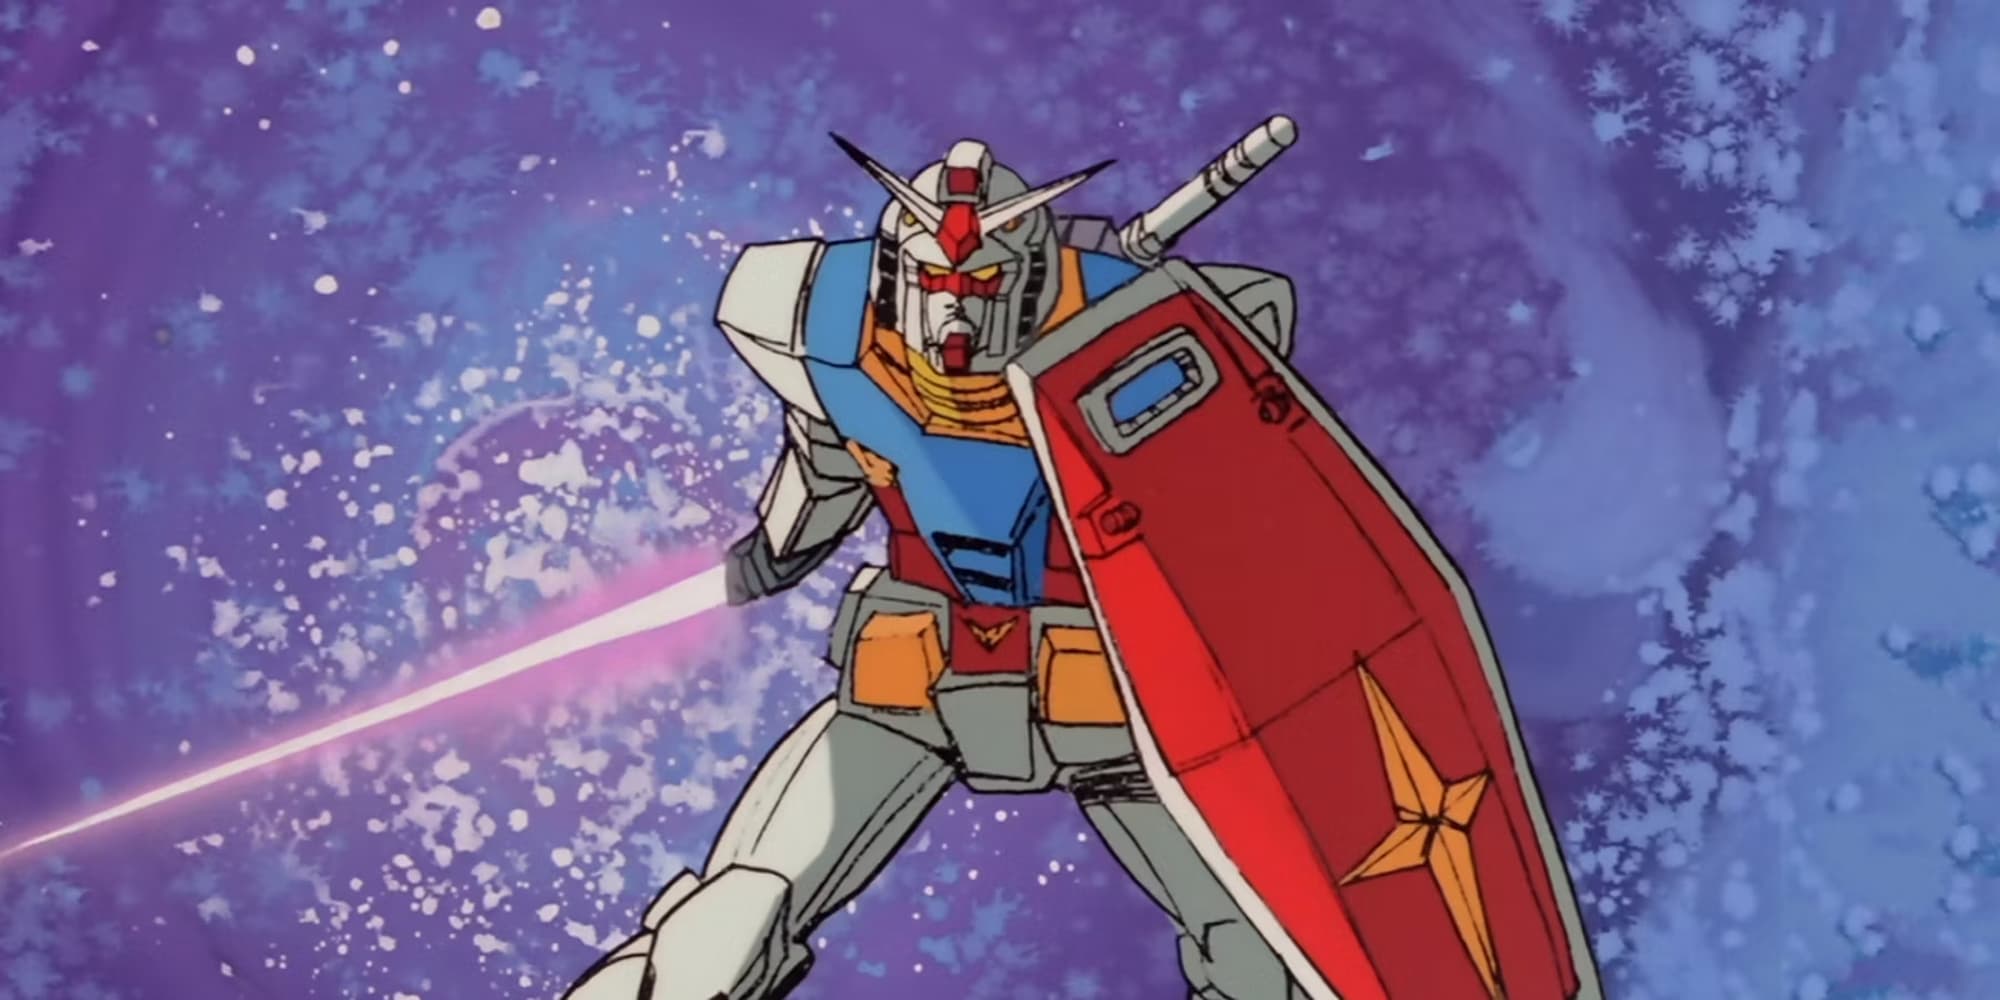 Gundam Build Fight Pose with Anime Background Editorial Image - Image of  kinda, quondam: 147786880